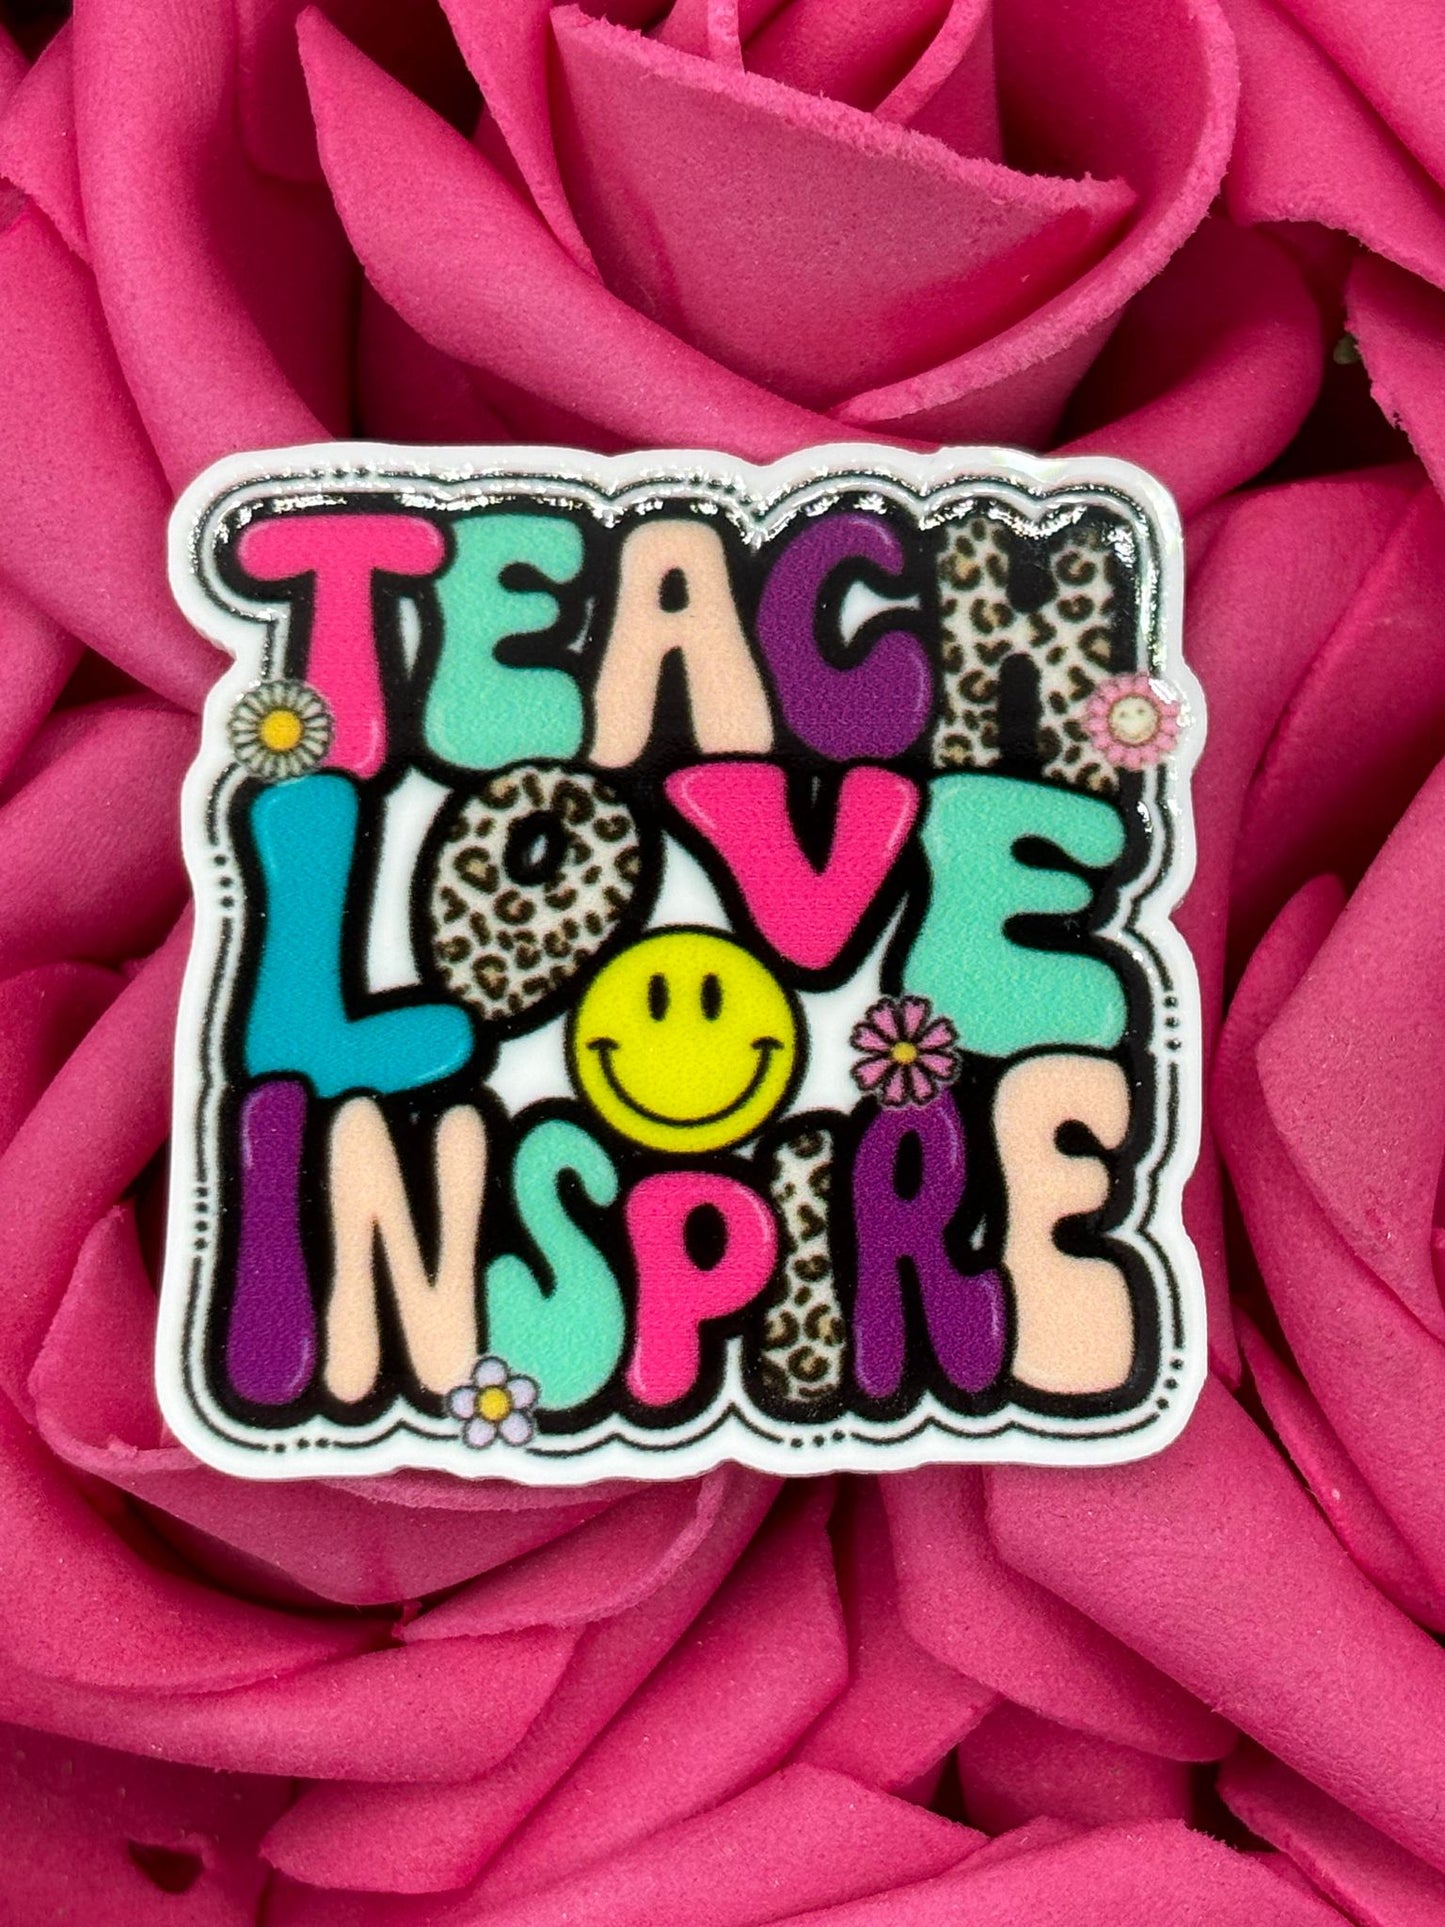 #2374 Teach Love Inspire